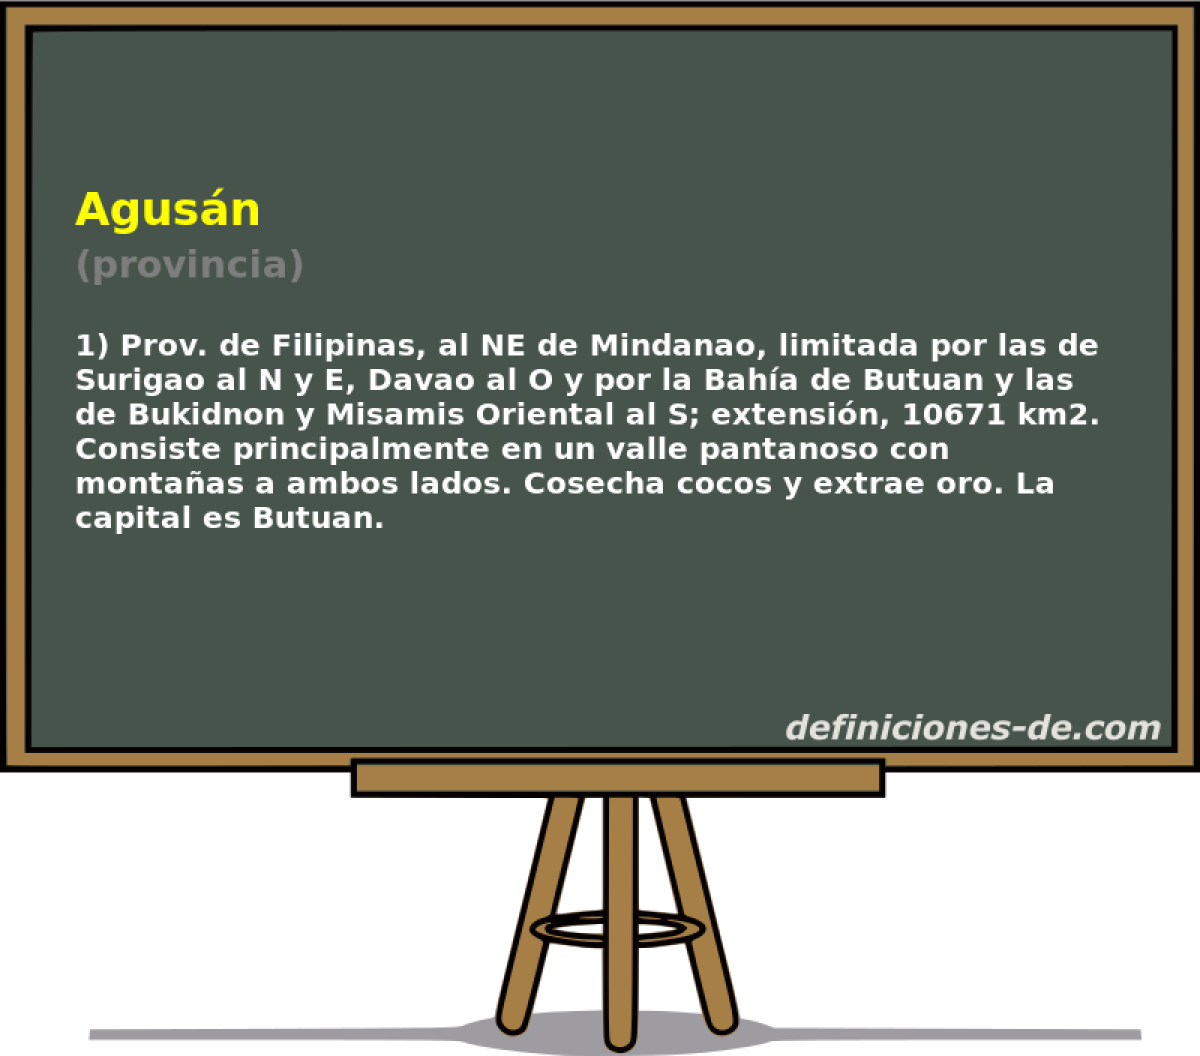 Agusn (provincia)